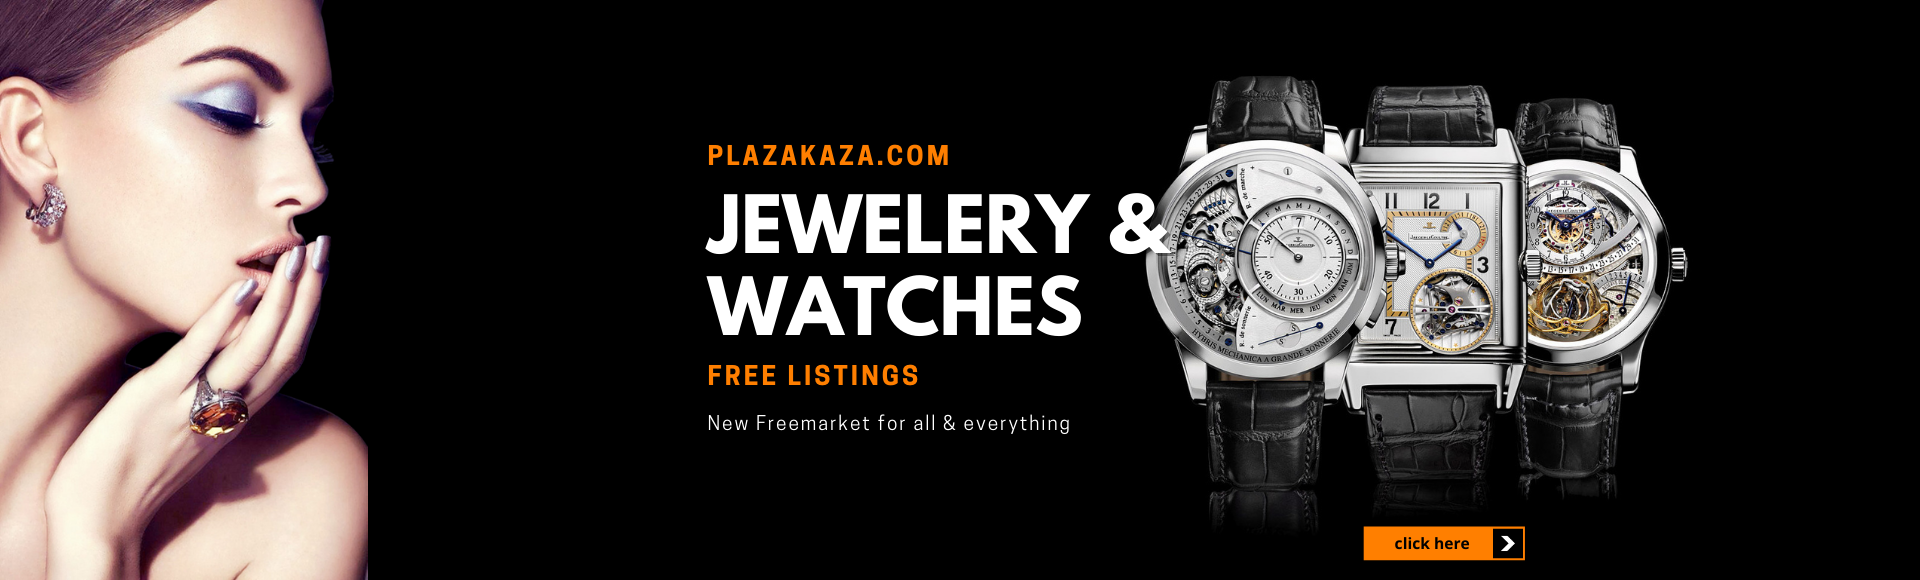 jewelery & watches